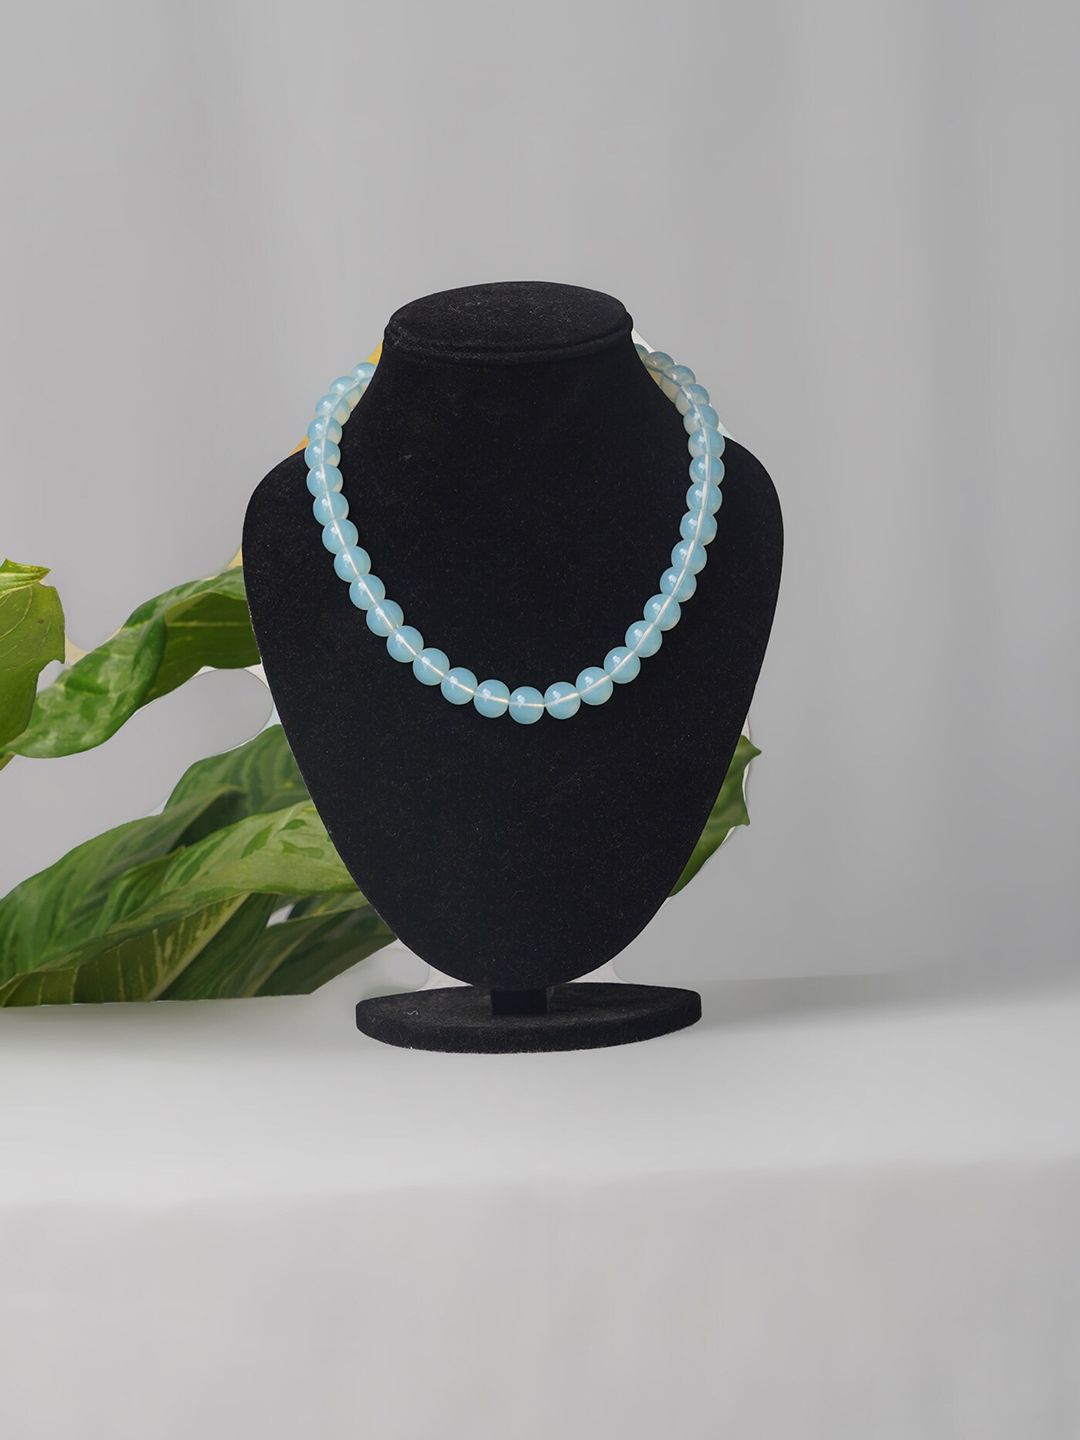 Unnati Silks Blue Amravati Ocean Beads Necklace Price in India